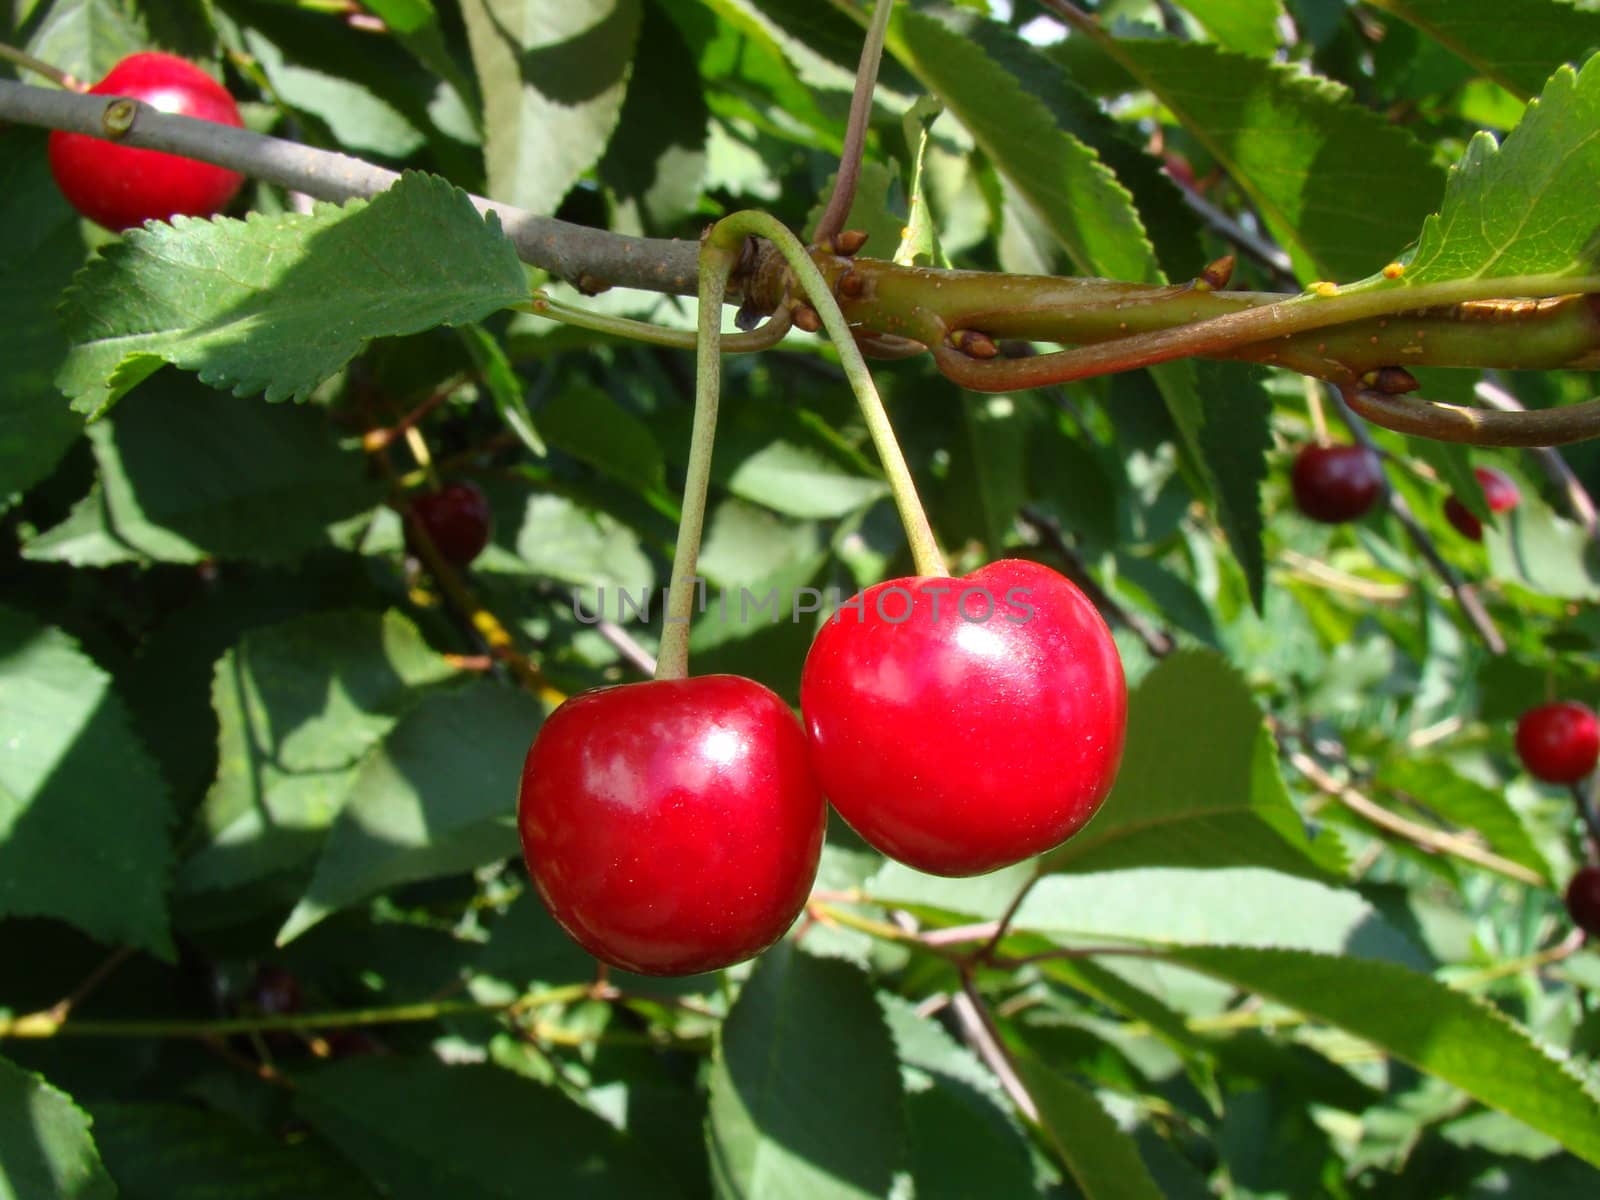 Red cherry on tree in garden